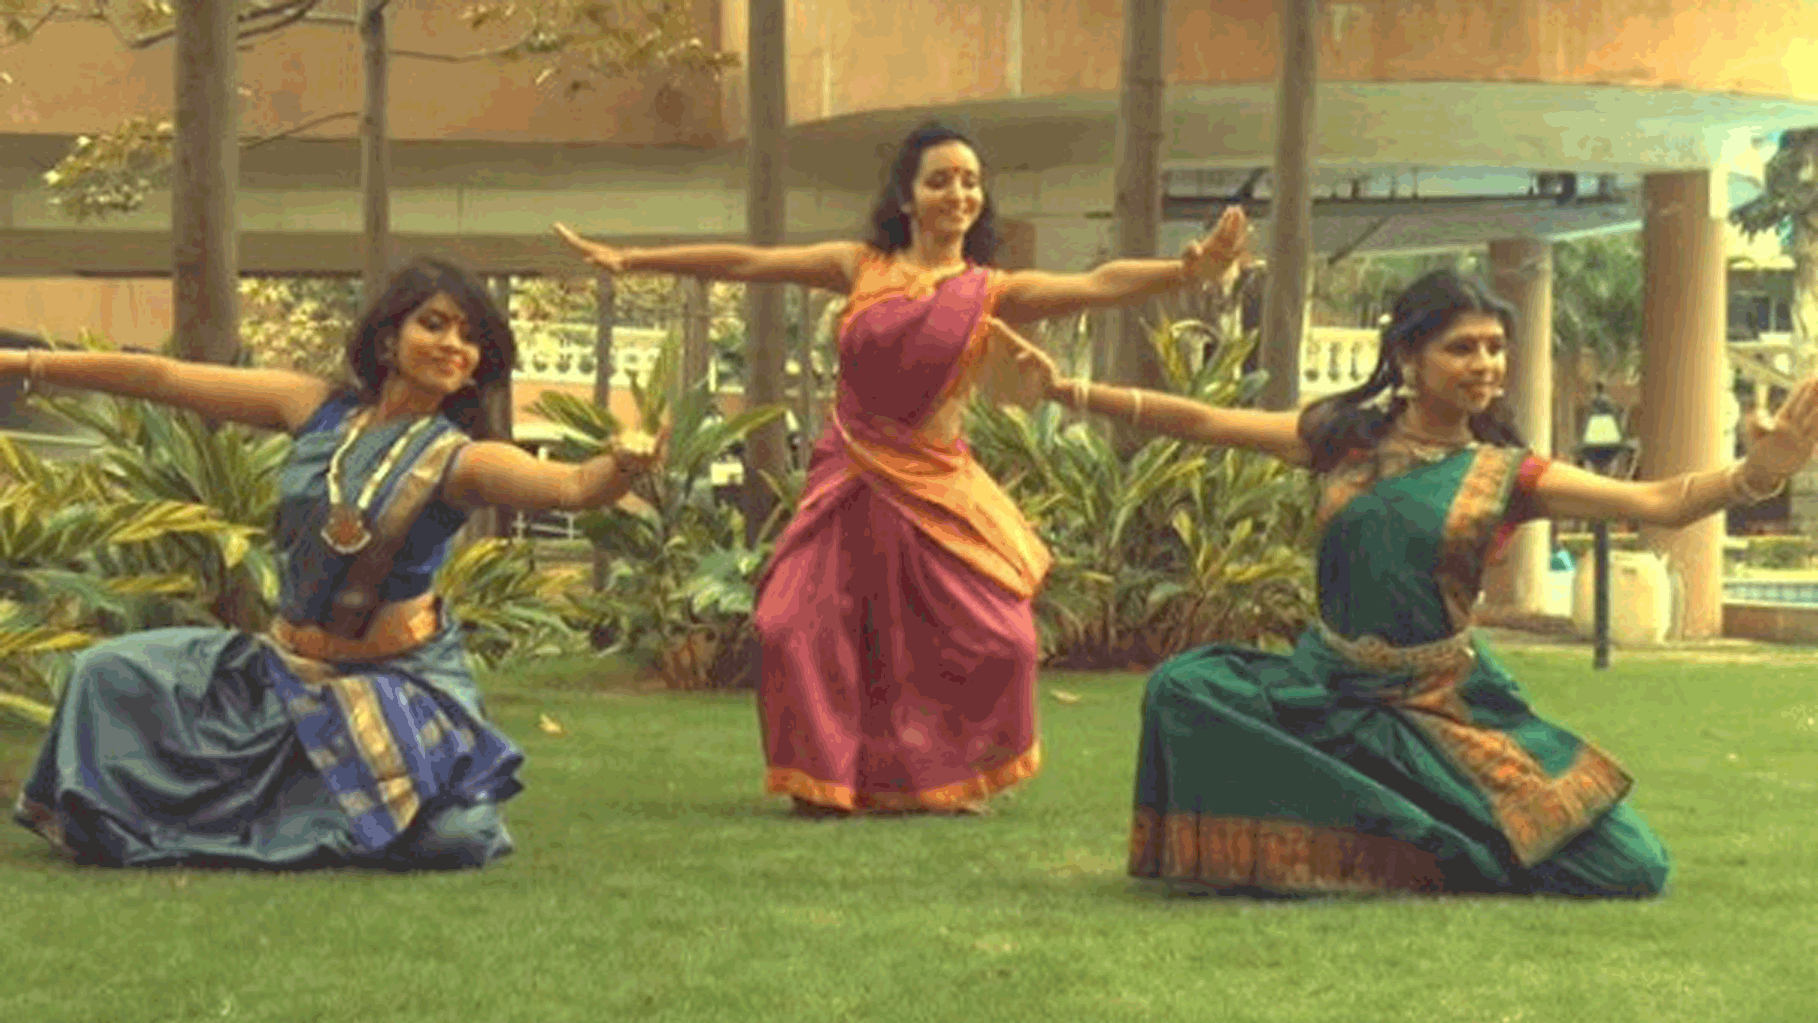 Screengrab from Bengaluru trio’s Bhratnatyam fusion. (Photo Courtesy: <a href="https://www.youtube.com/watch?v=UVdy1kaoNNI">Youtube/Priya Kumar</a>)